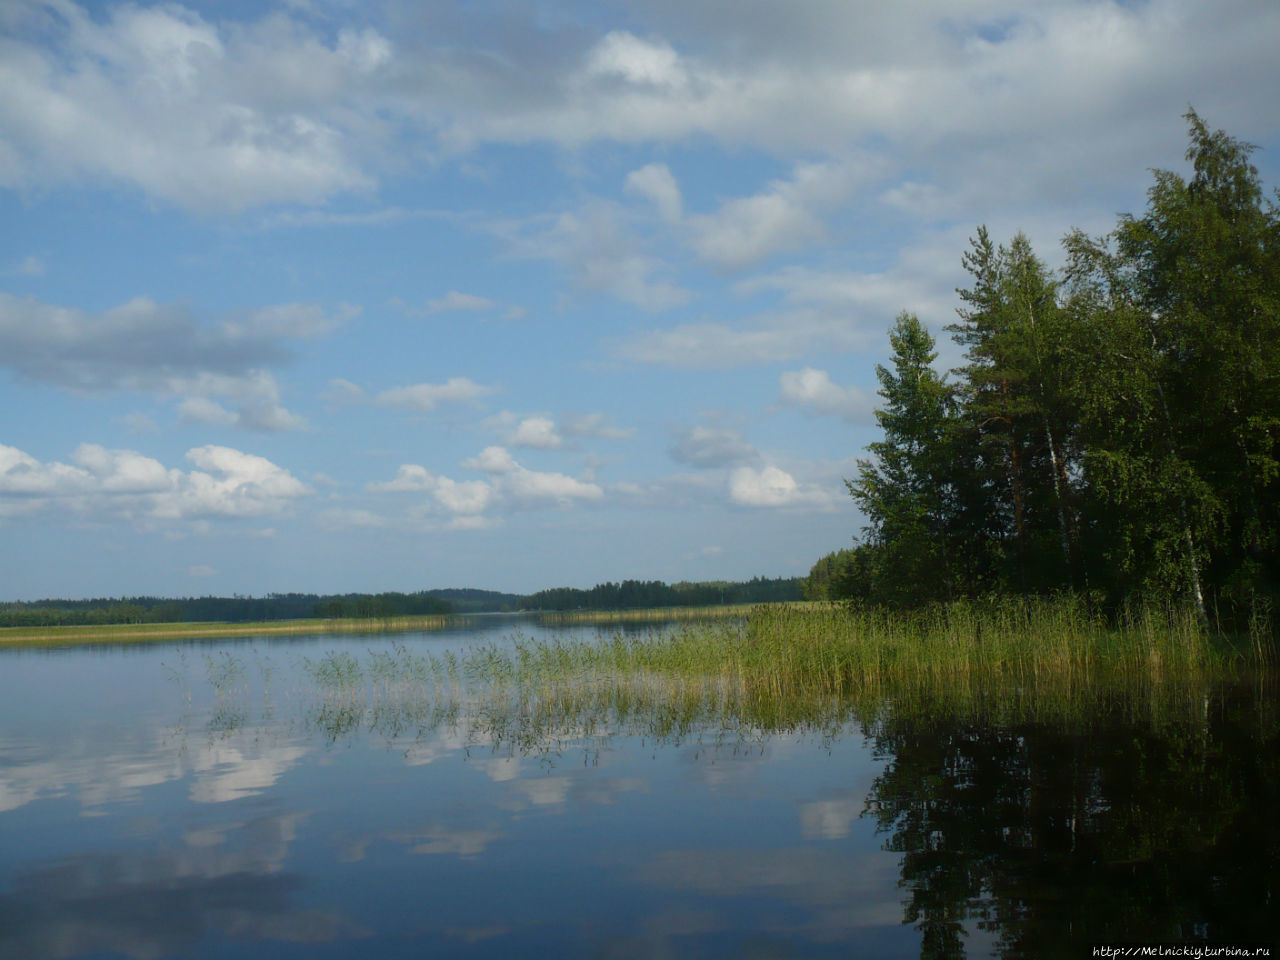 Канал Телатайпале Лохилахти, Финляндия